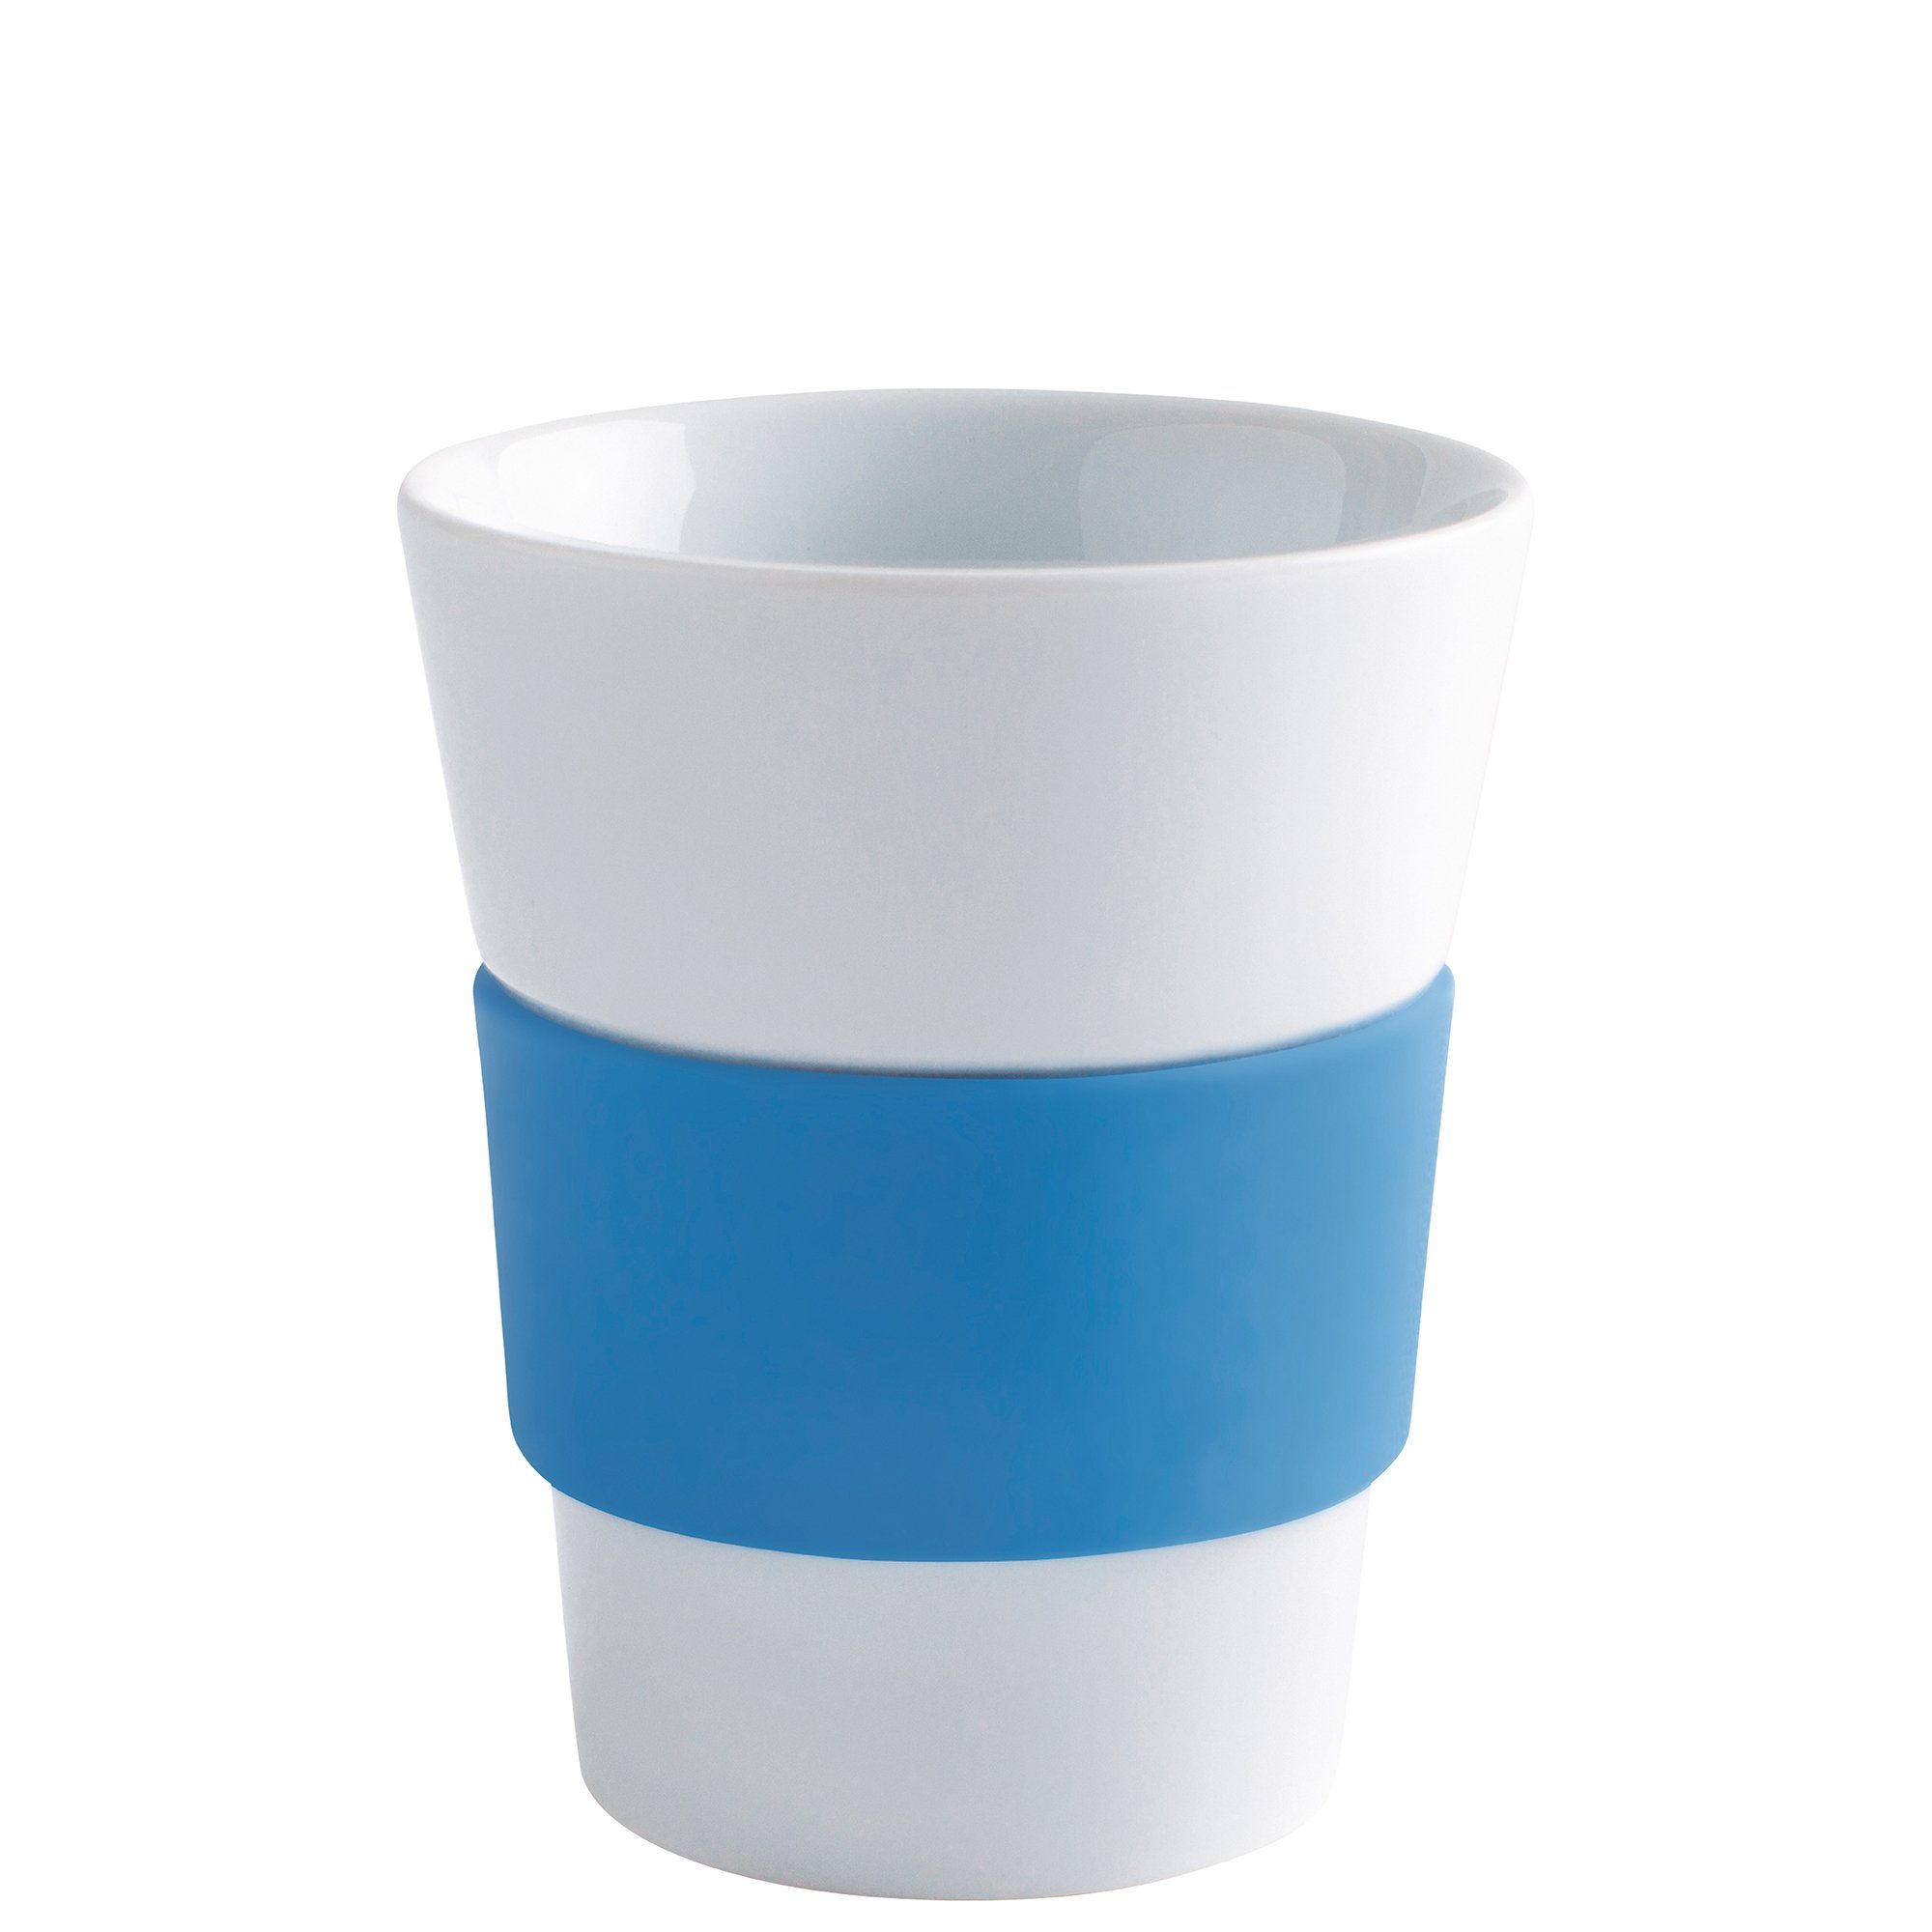 Made sky Trinkdeckel, Cupit + blue Germany Porzellan, Coffee-to-go-Becher in Becher Kahla